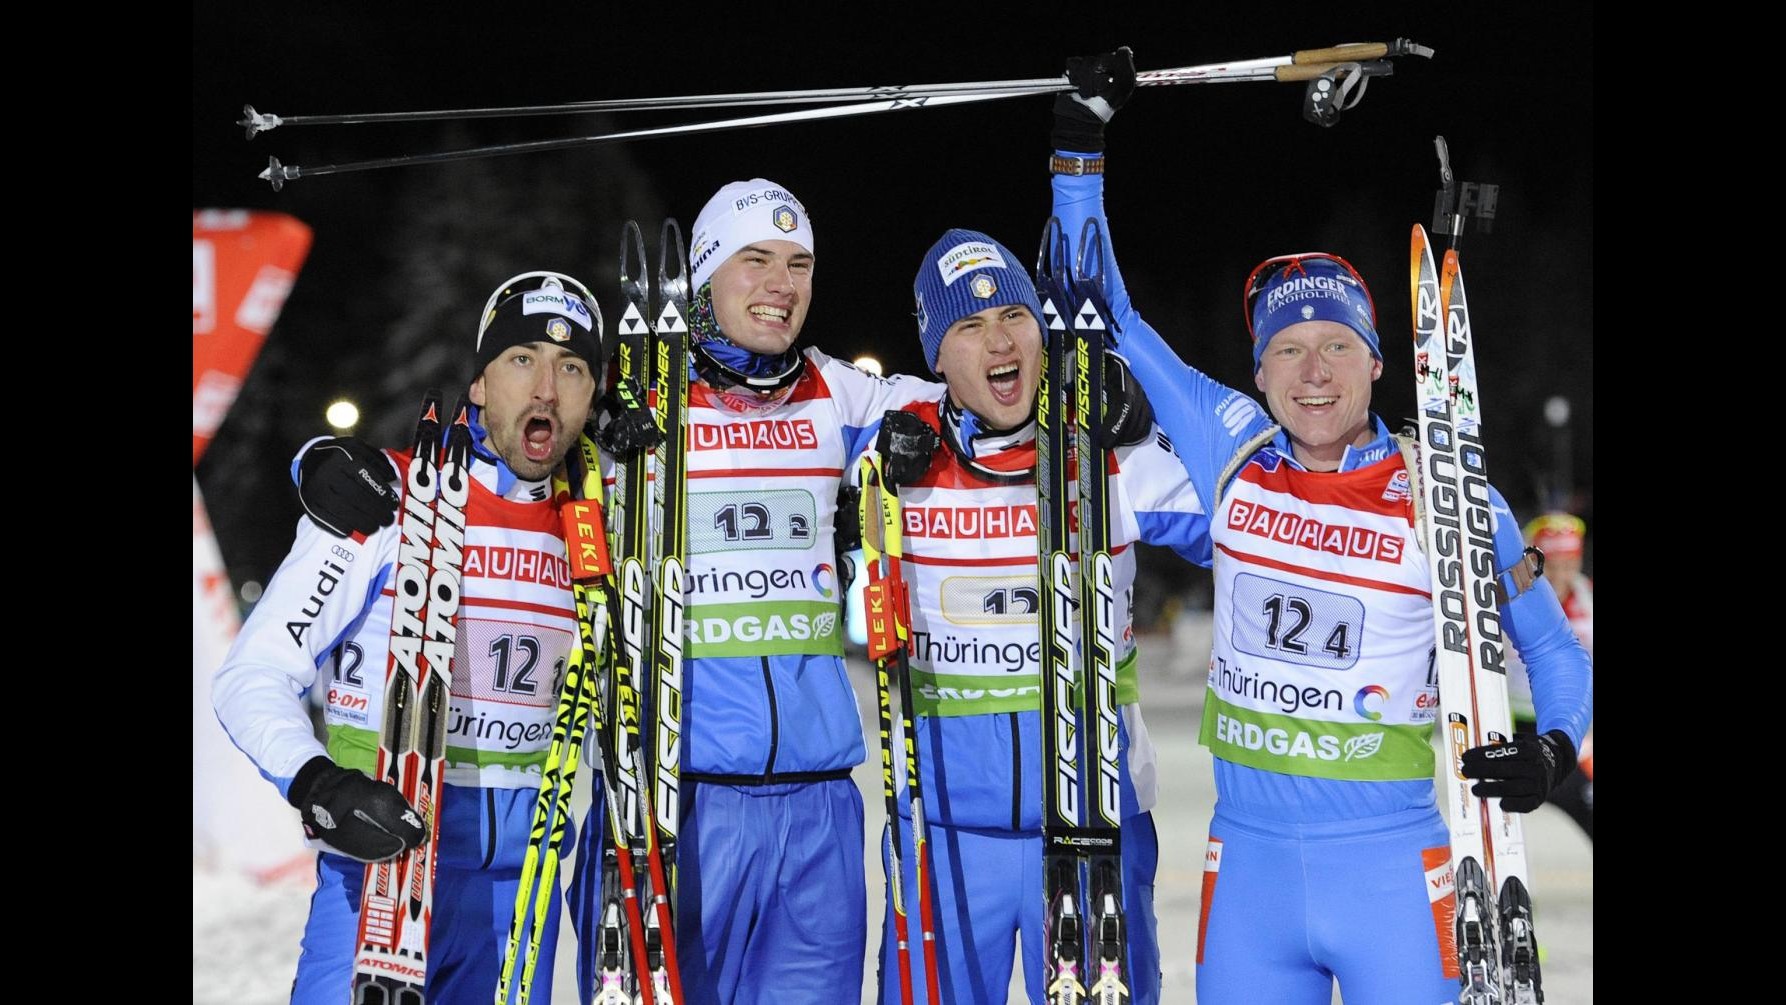 Biathlon, Italia vince staffetta maschile Oberhof. Prima volta da 1994